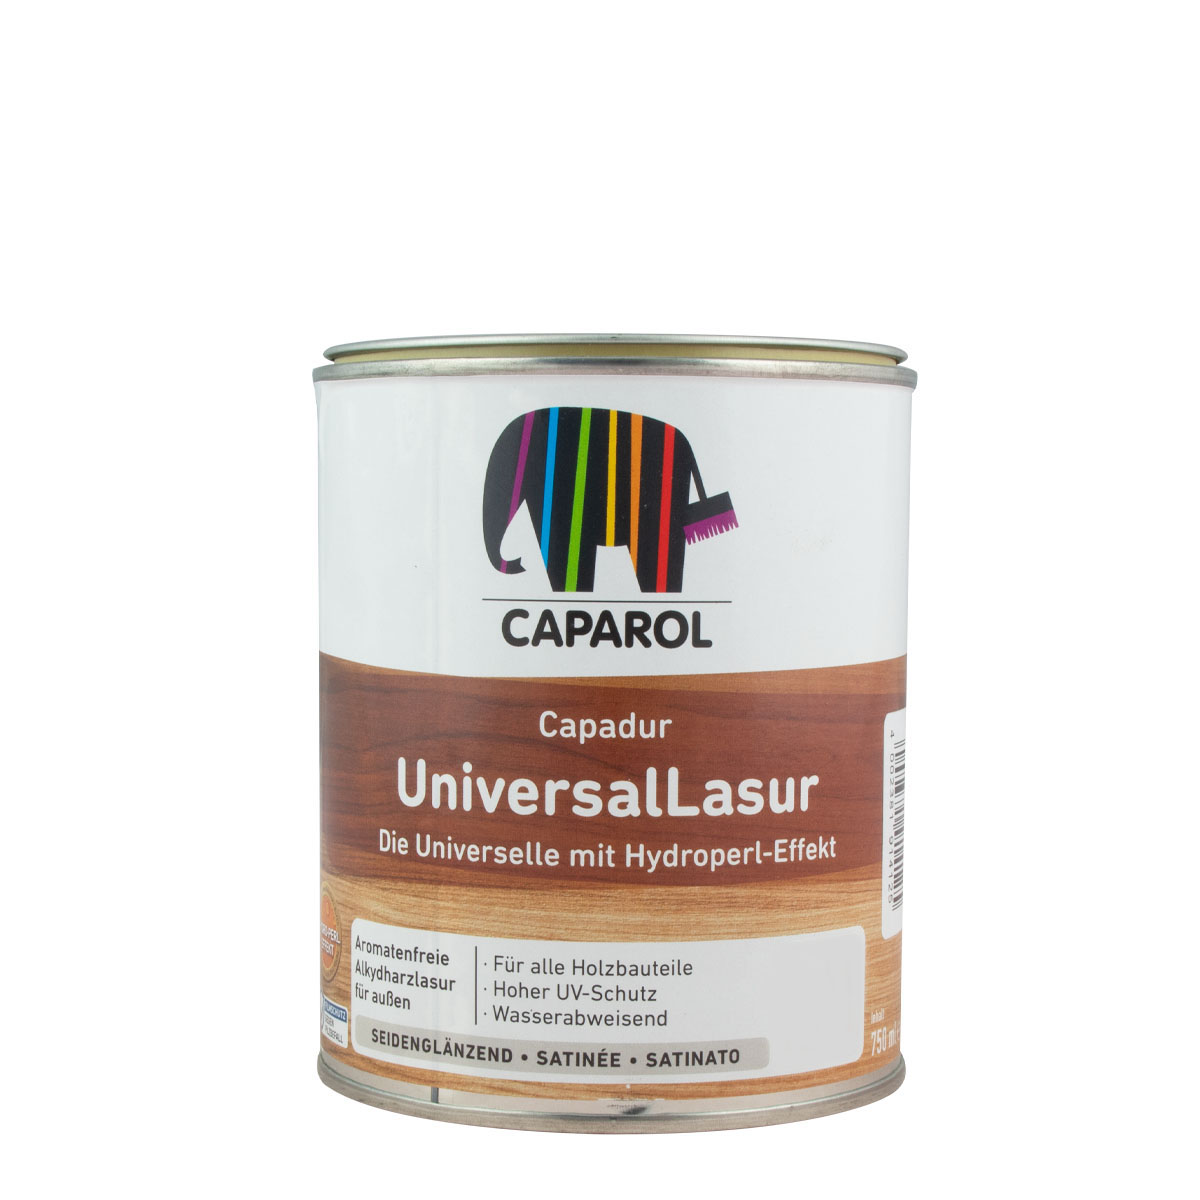 Caparol Capadur Universal Lasur 750ml, Palisander